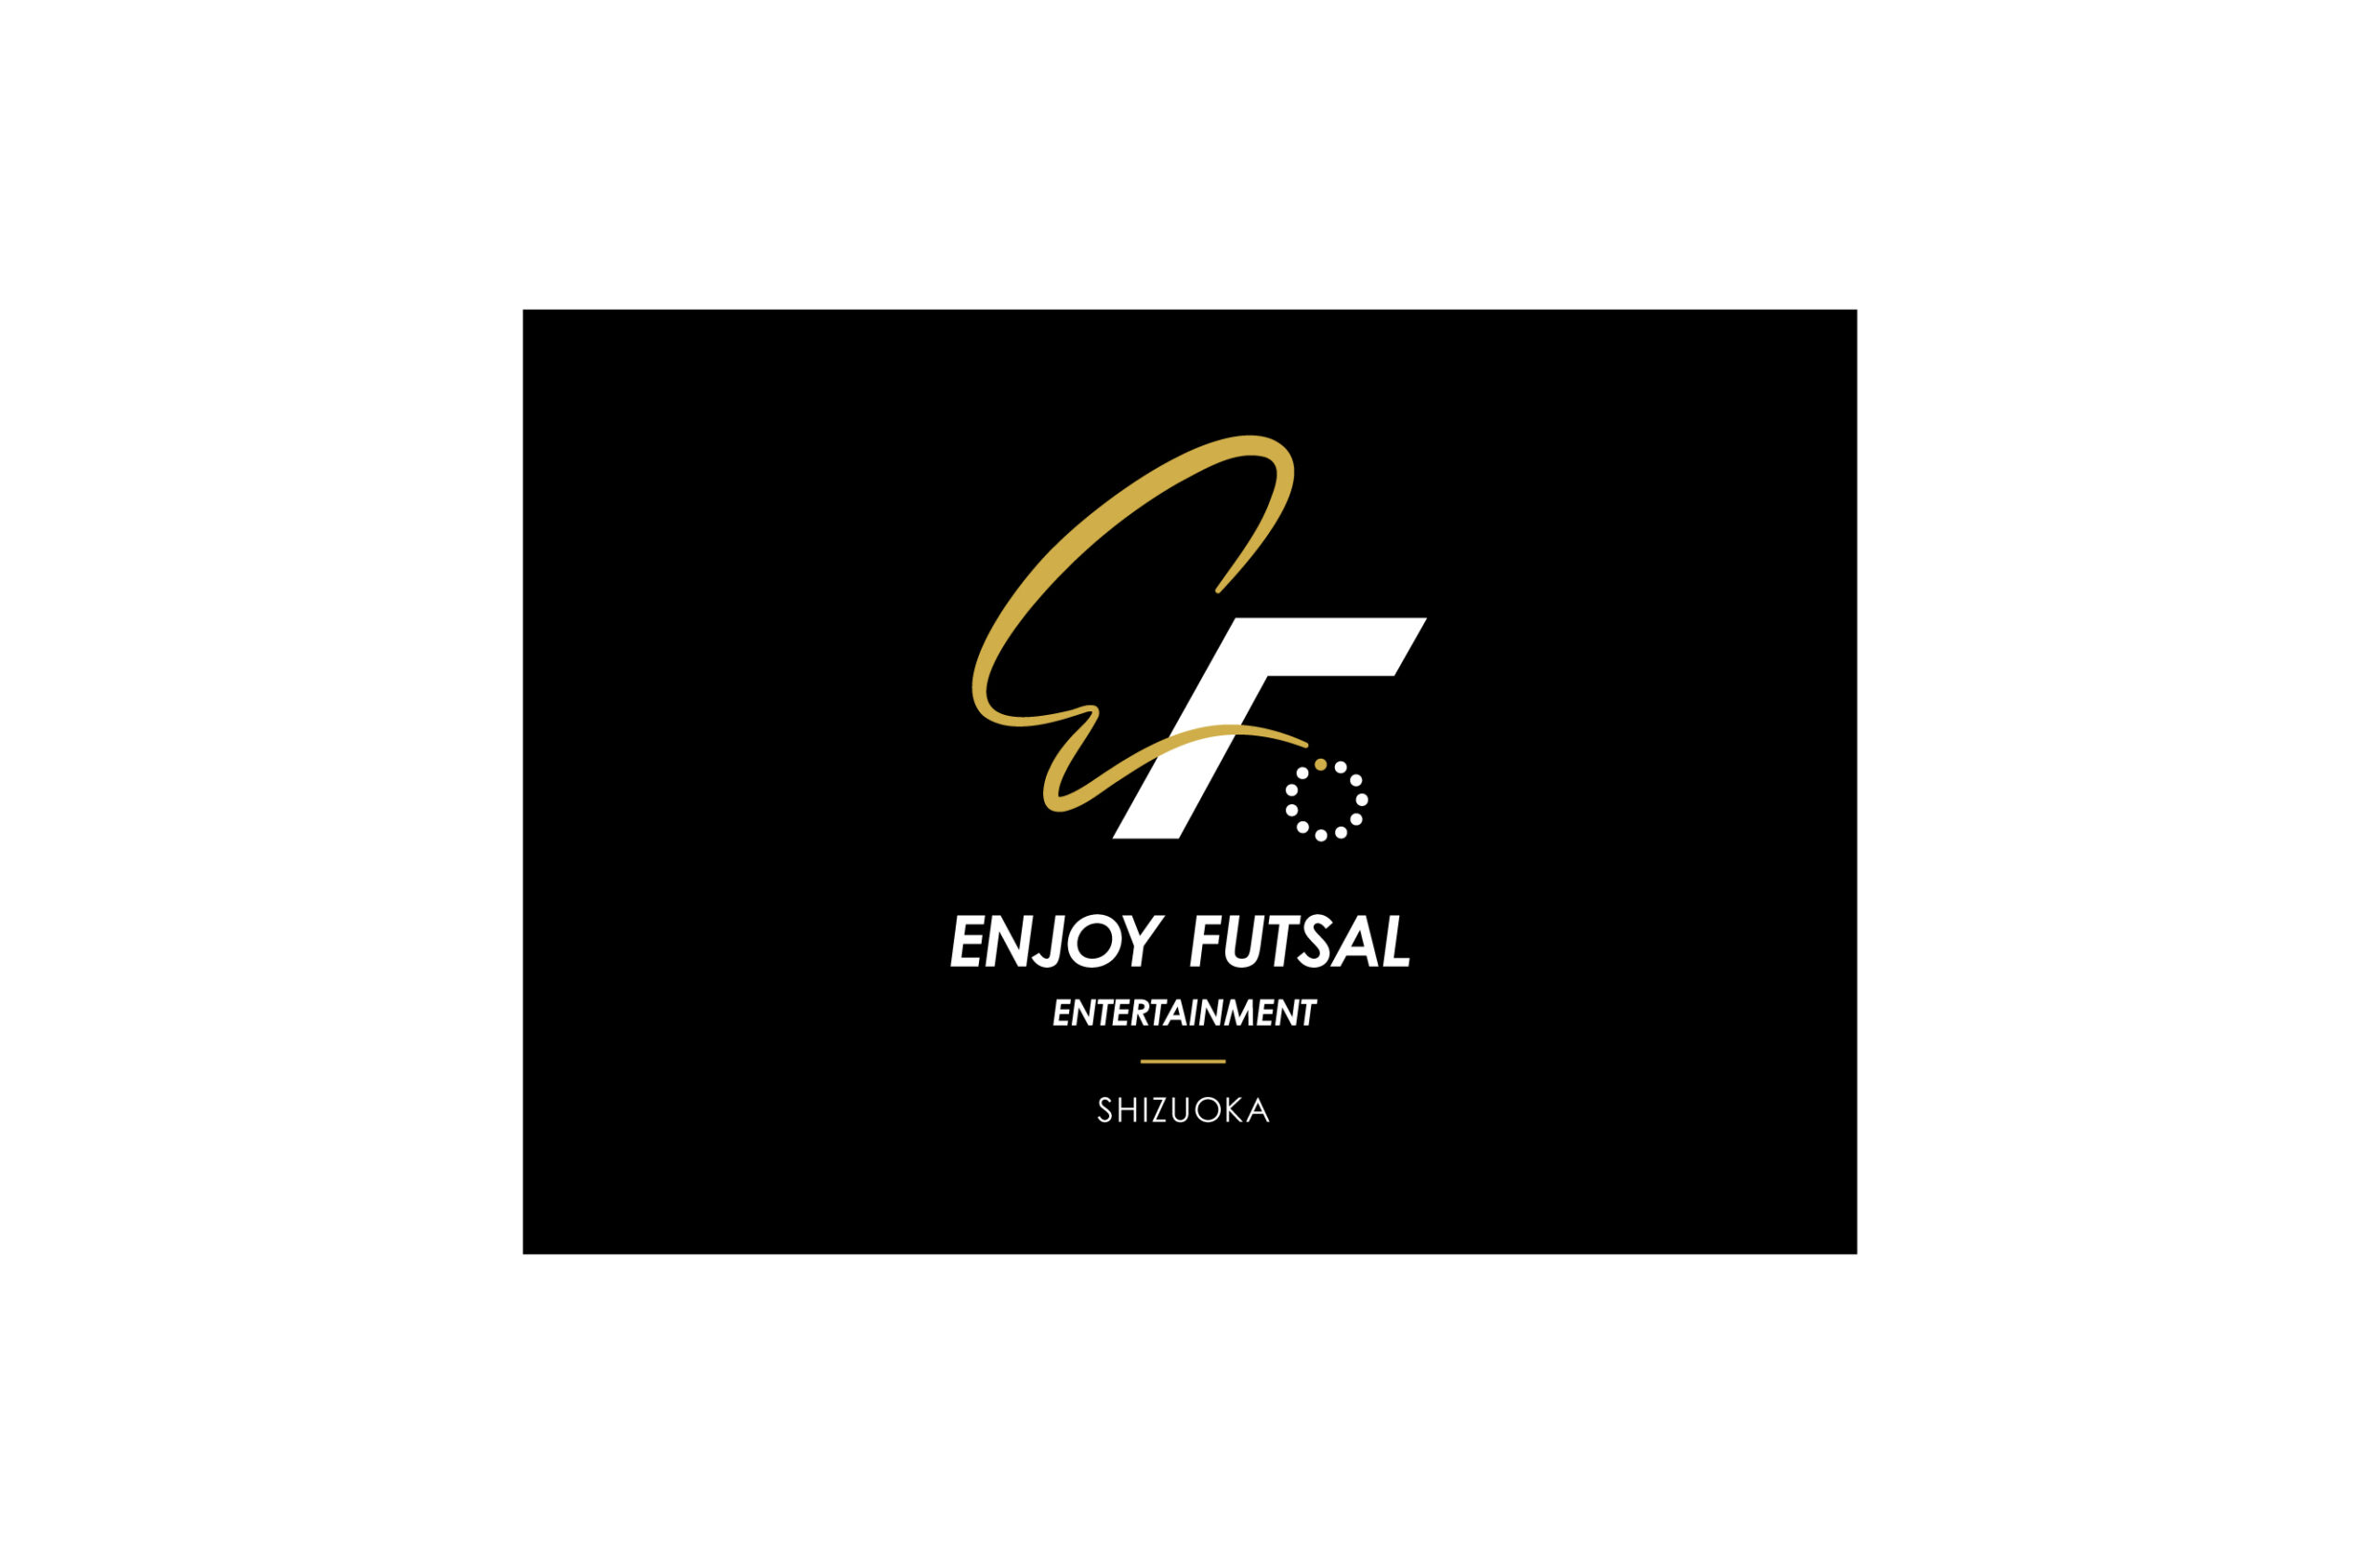 Enjoy Futsal Entertainment  Shizuoka